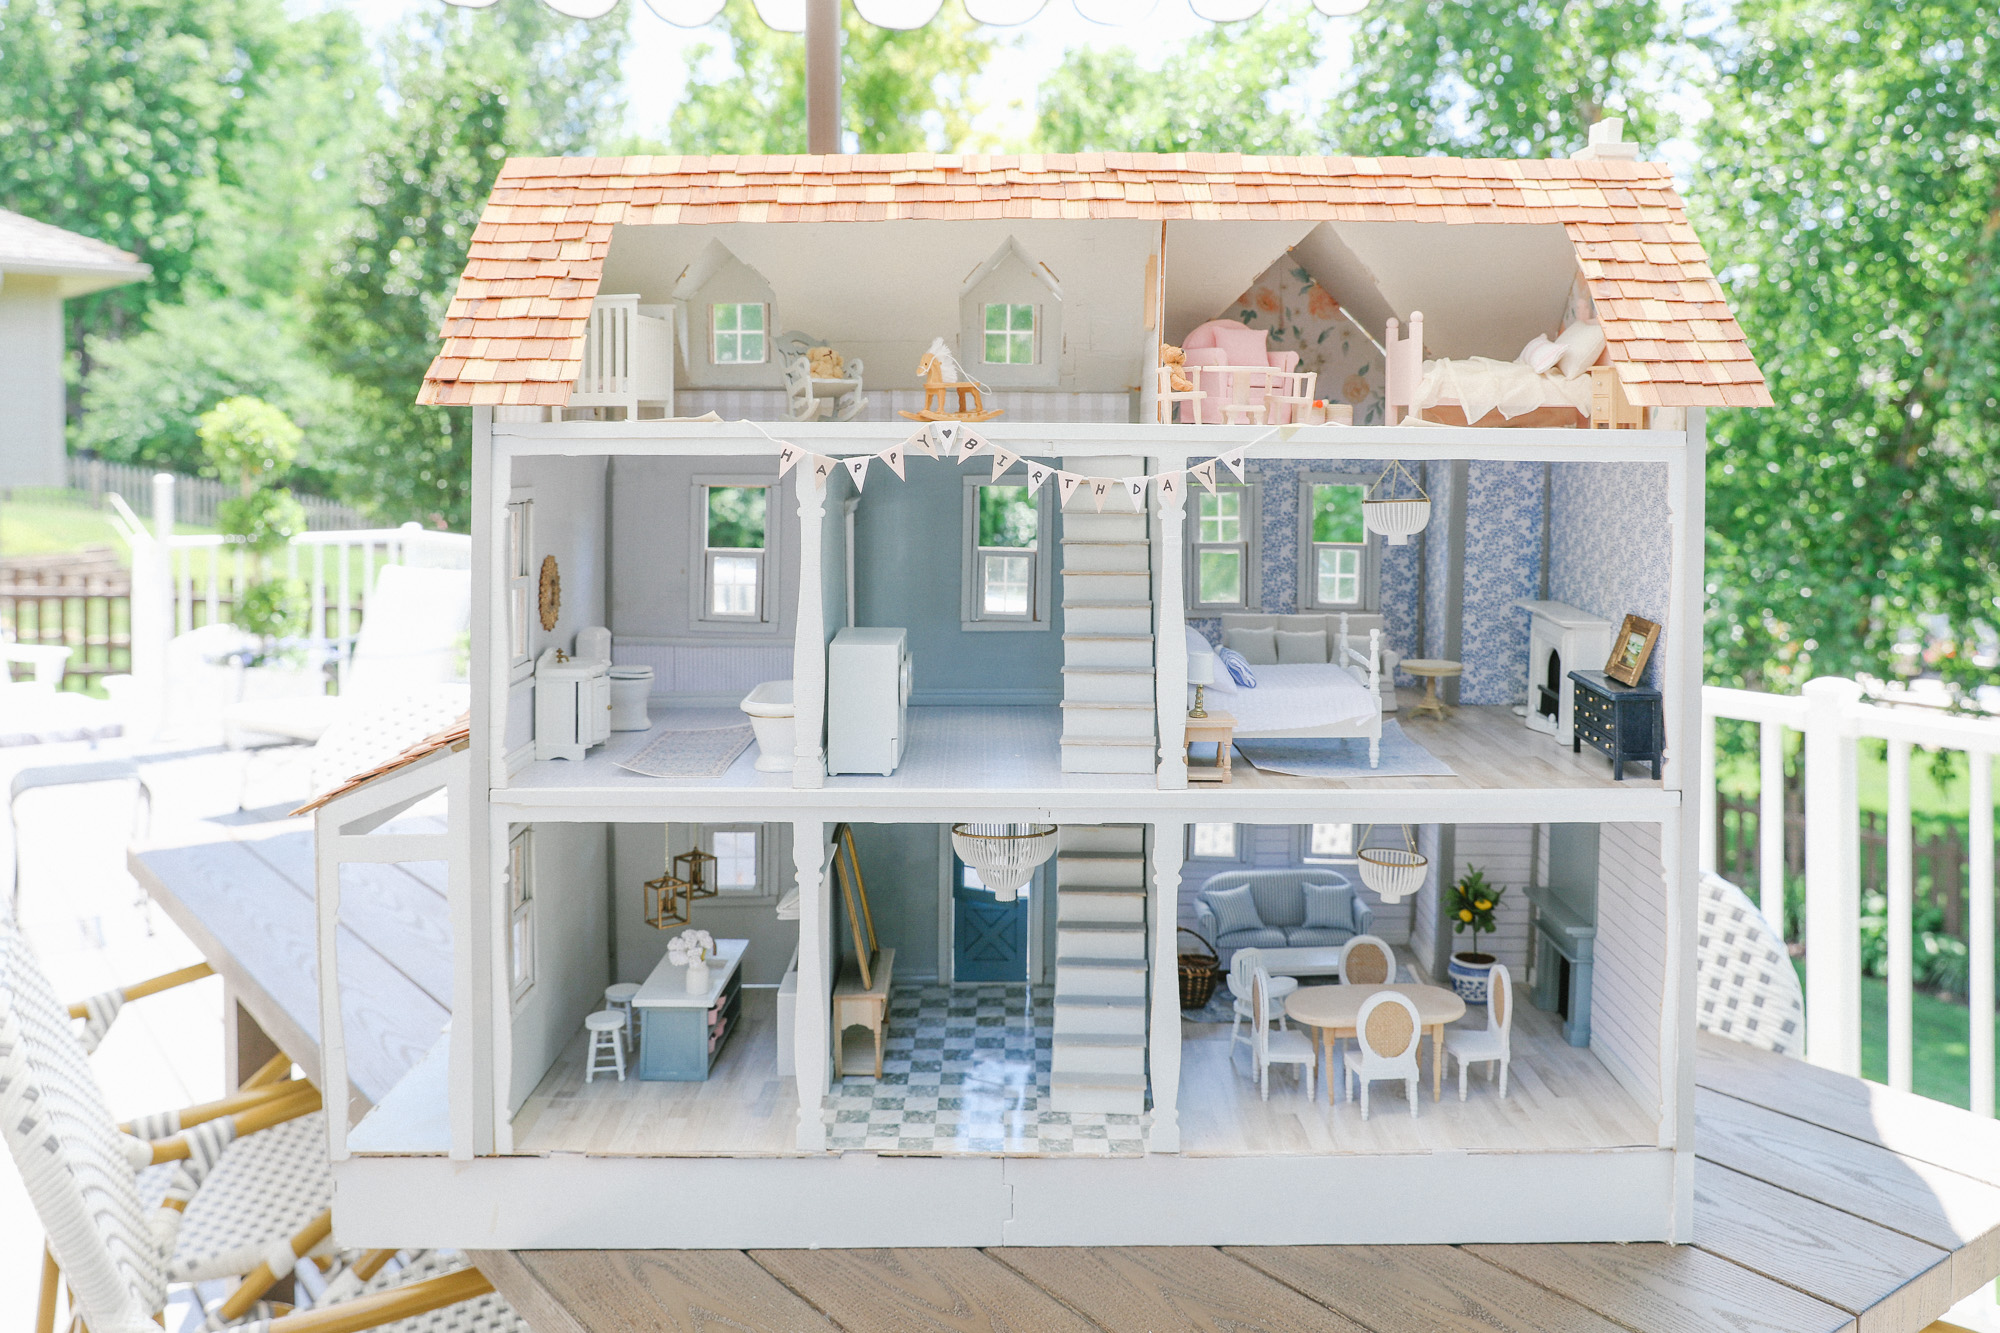 Dollhouse Miniatures & Dollhouse Kits